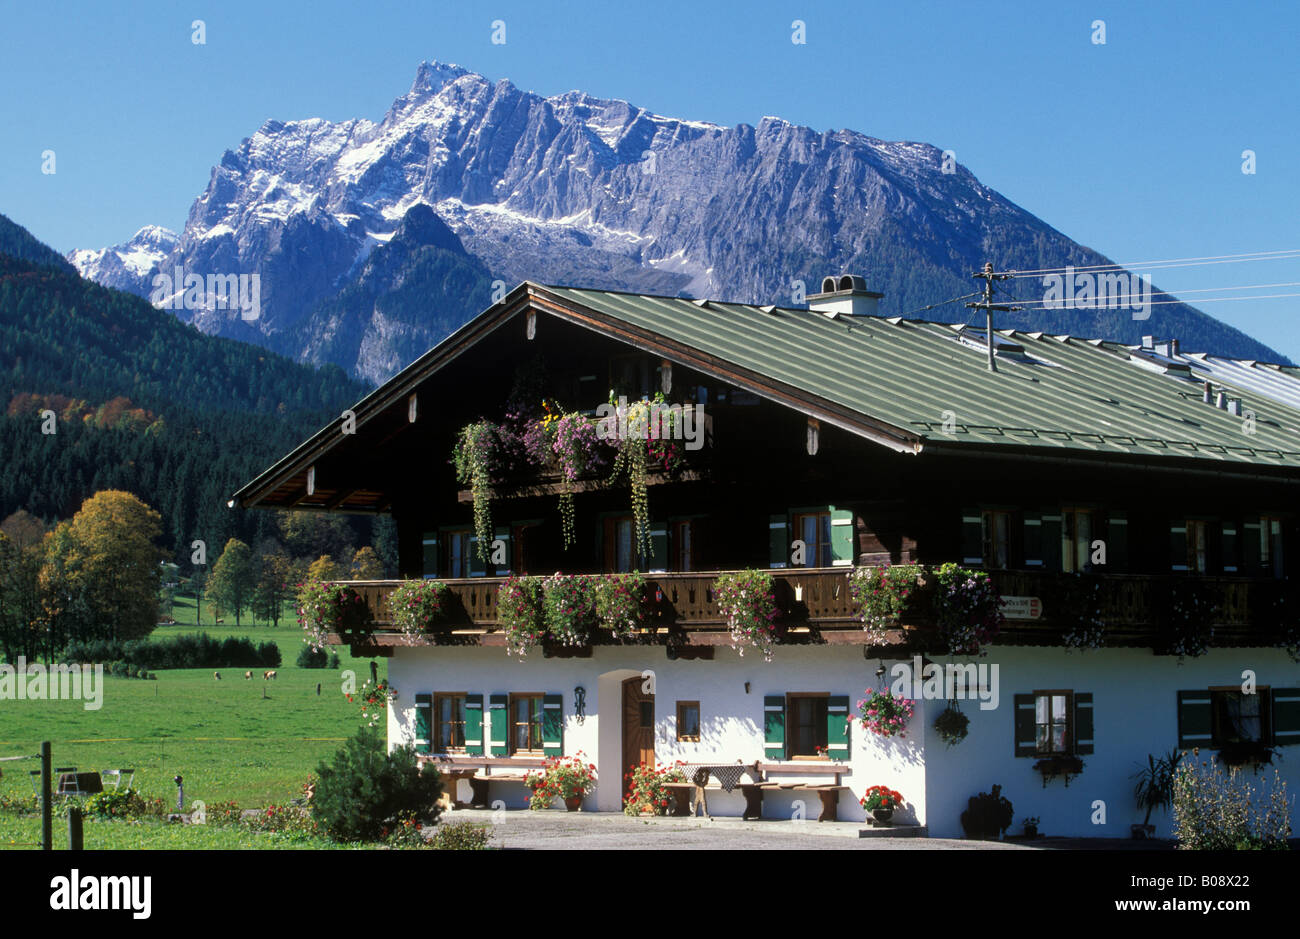 Oberschoenau village, Simonlehen, Mount Hochkalter, Berchtesgaden region, Oberbayern (Upper Bavaria), Germany, Europe Stock Photo